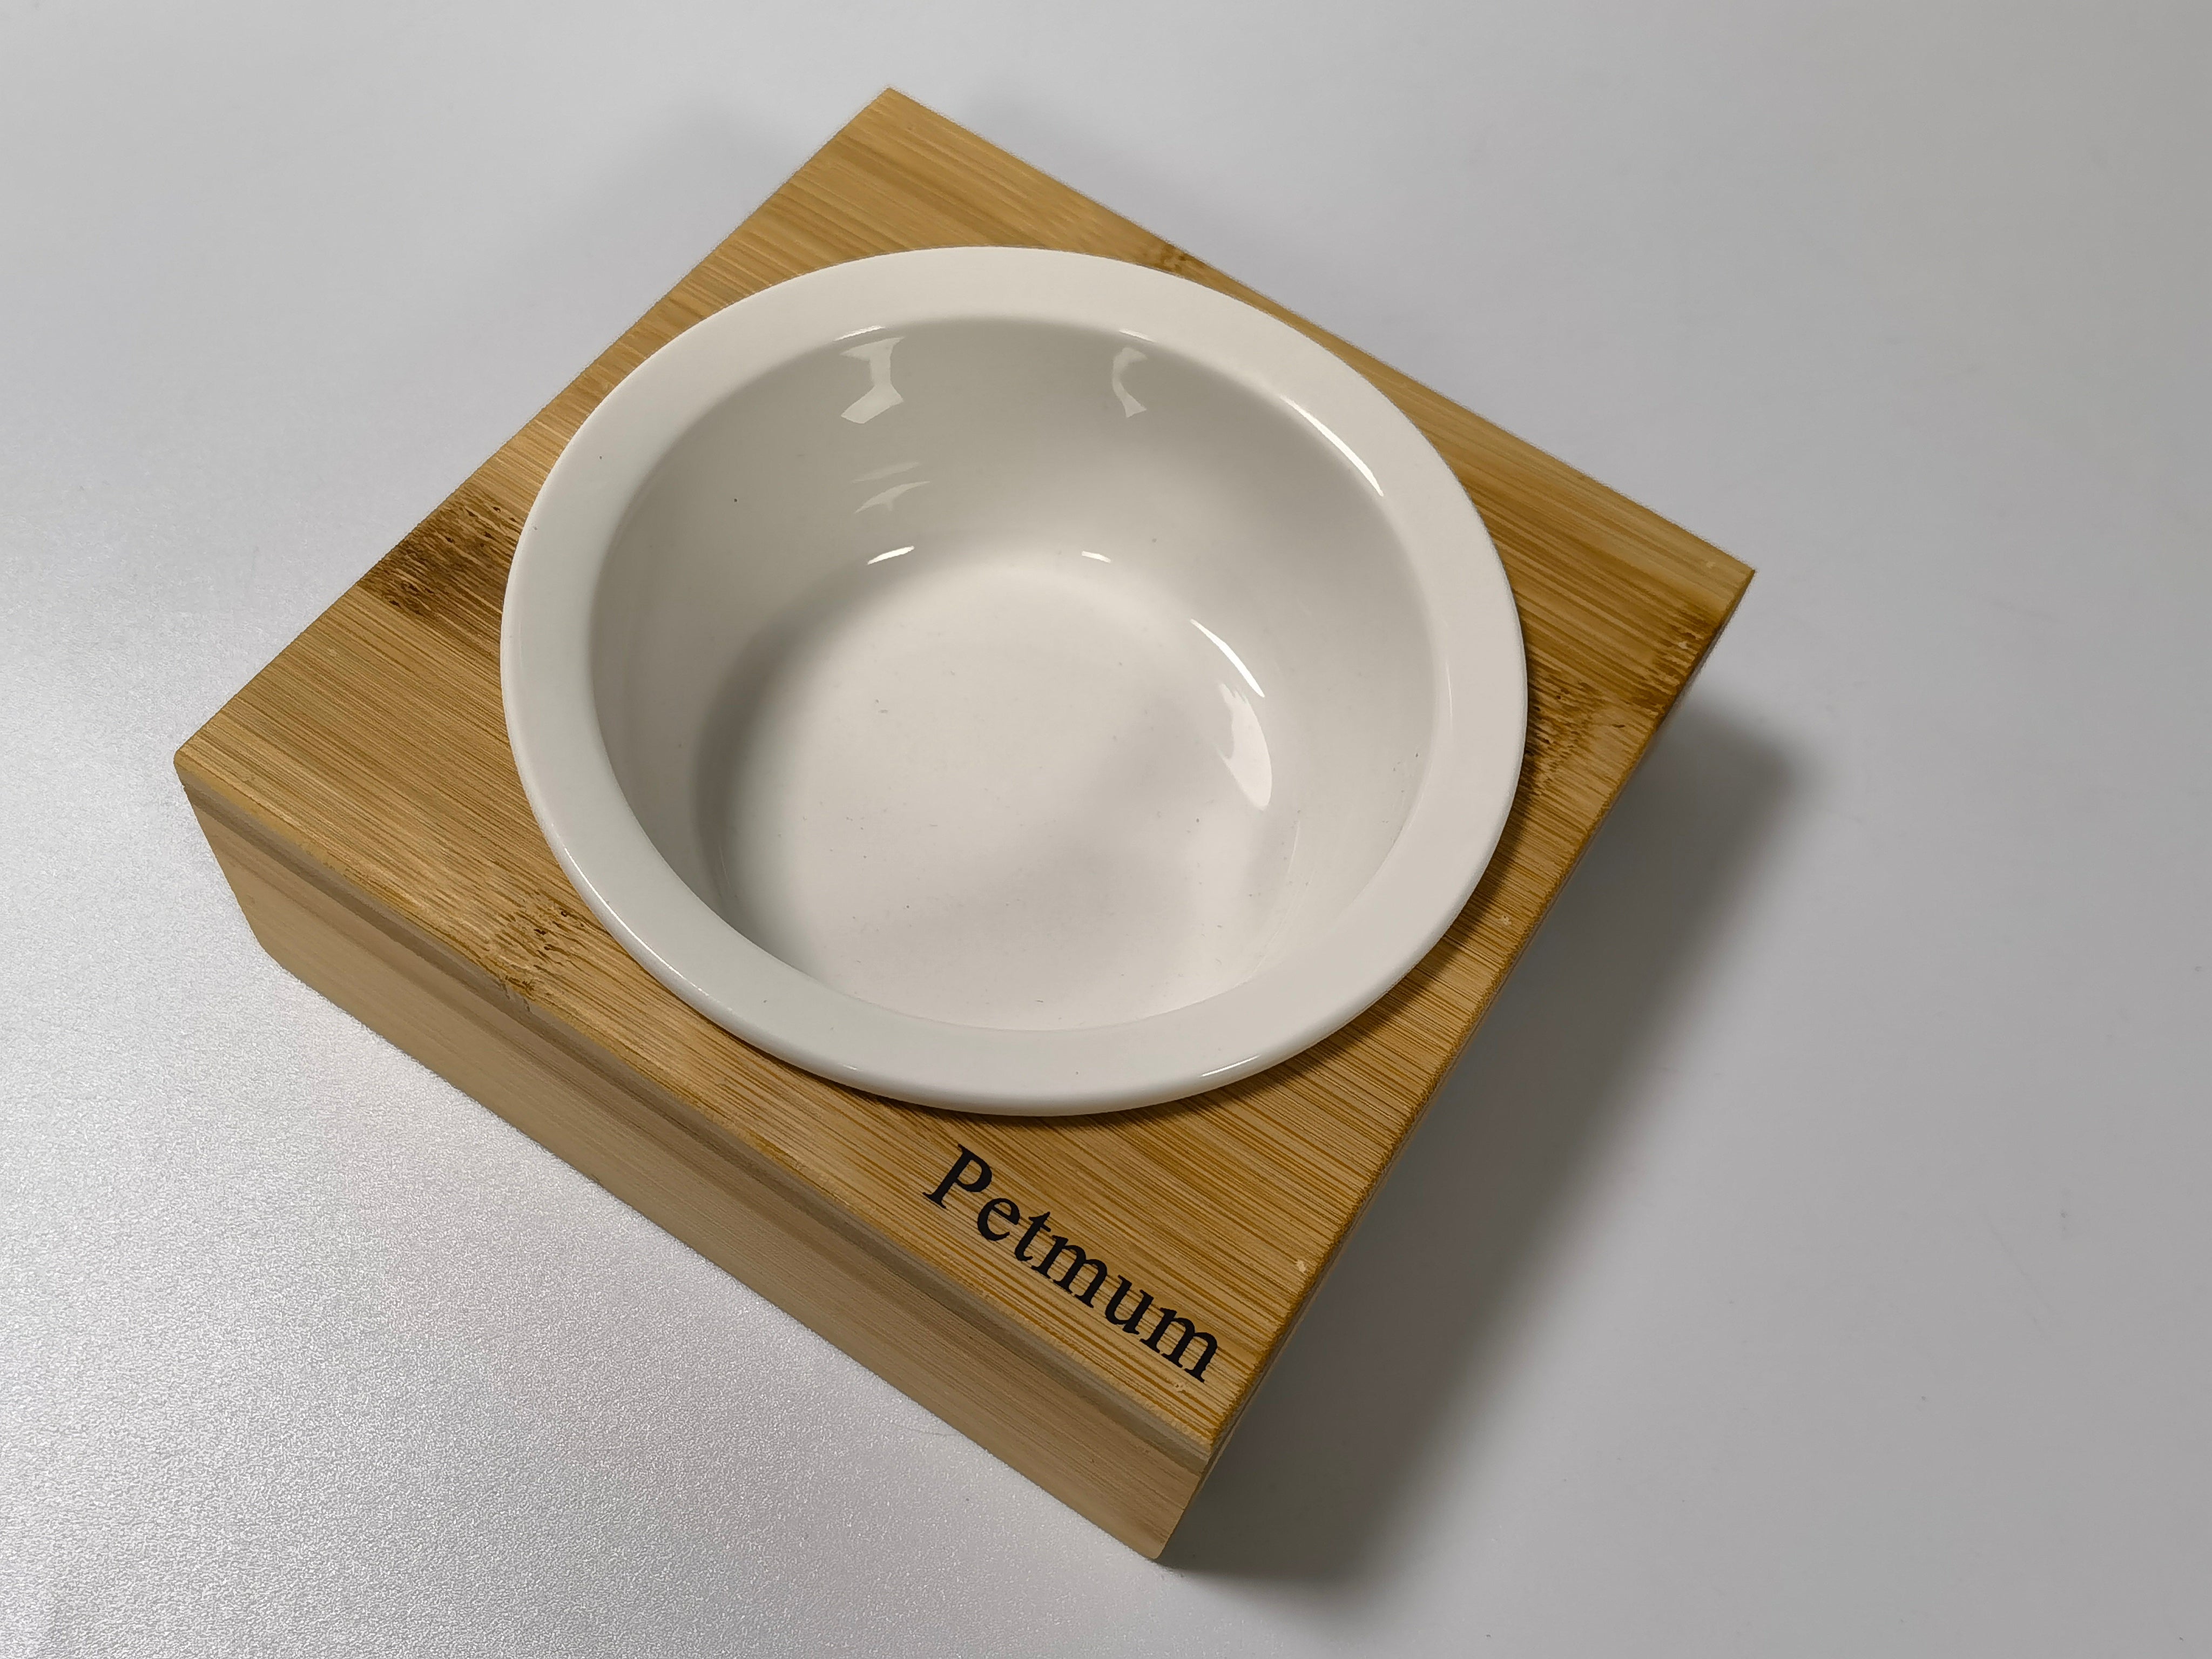 PETMUM Bamboo wood hollow ceramic cat bowl